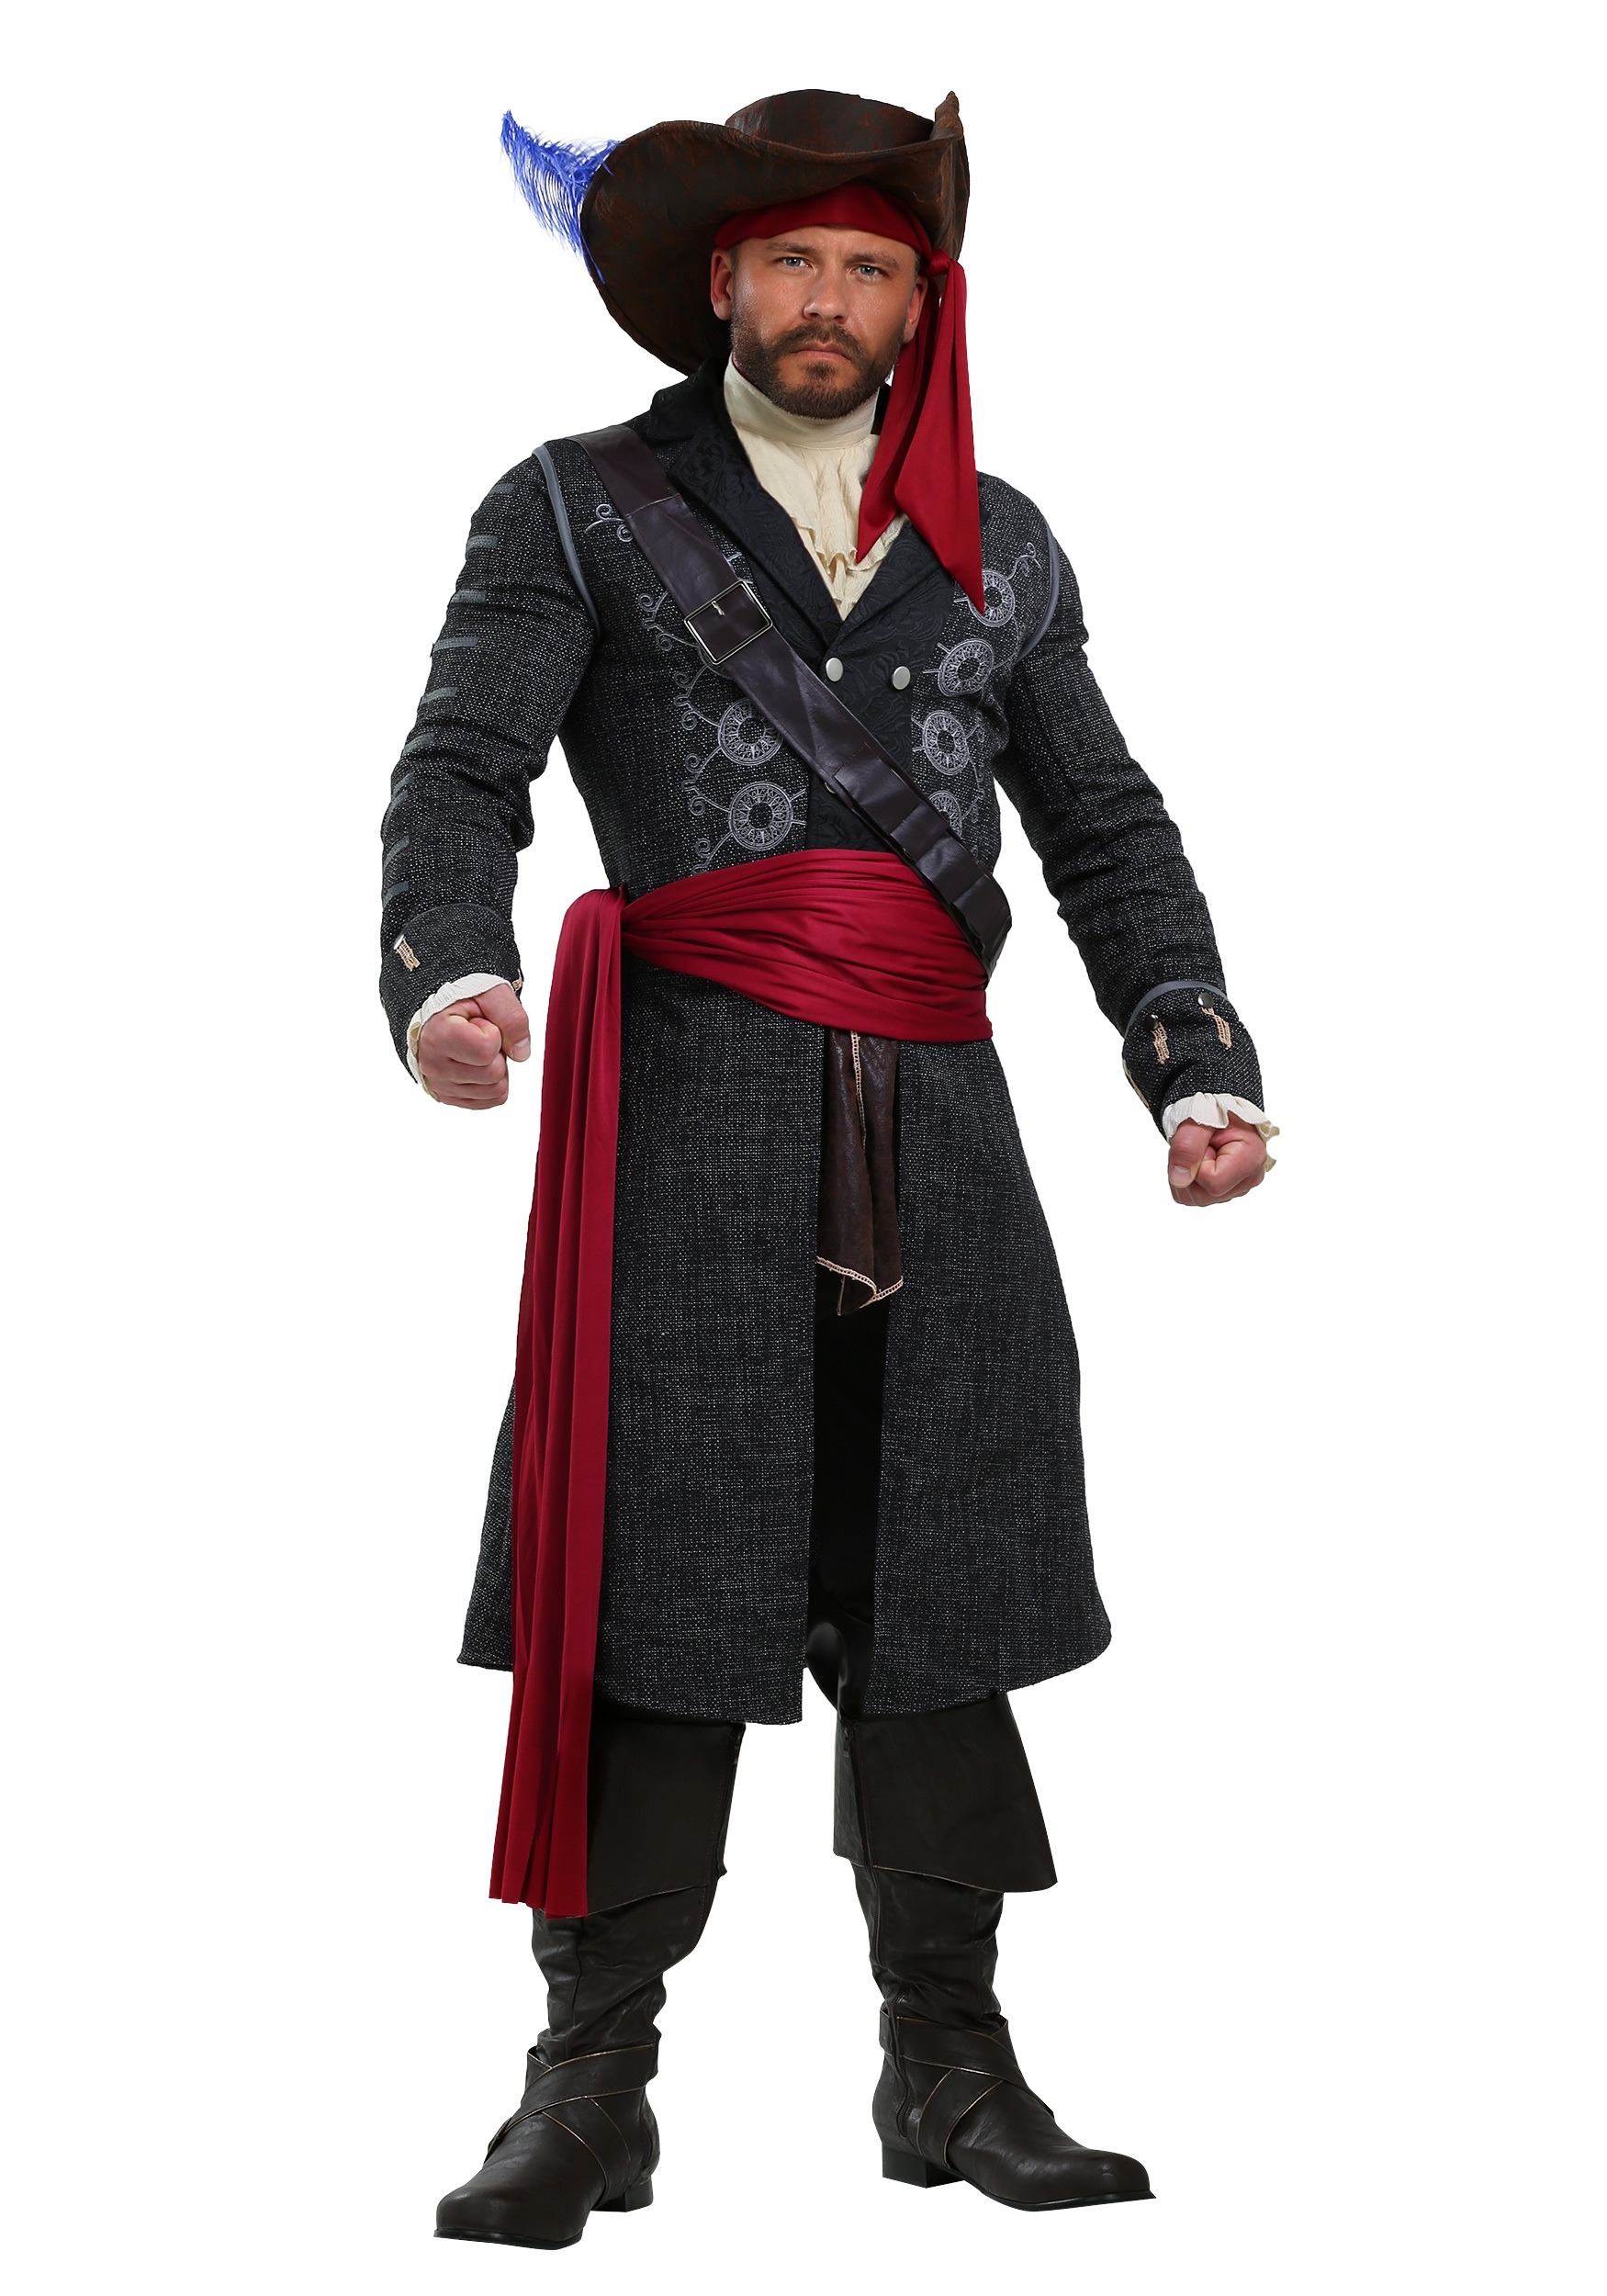 Blackbeard Costume For Plus Size Men , Men's Pirate Costume